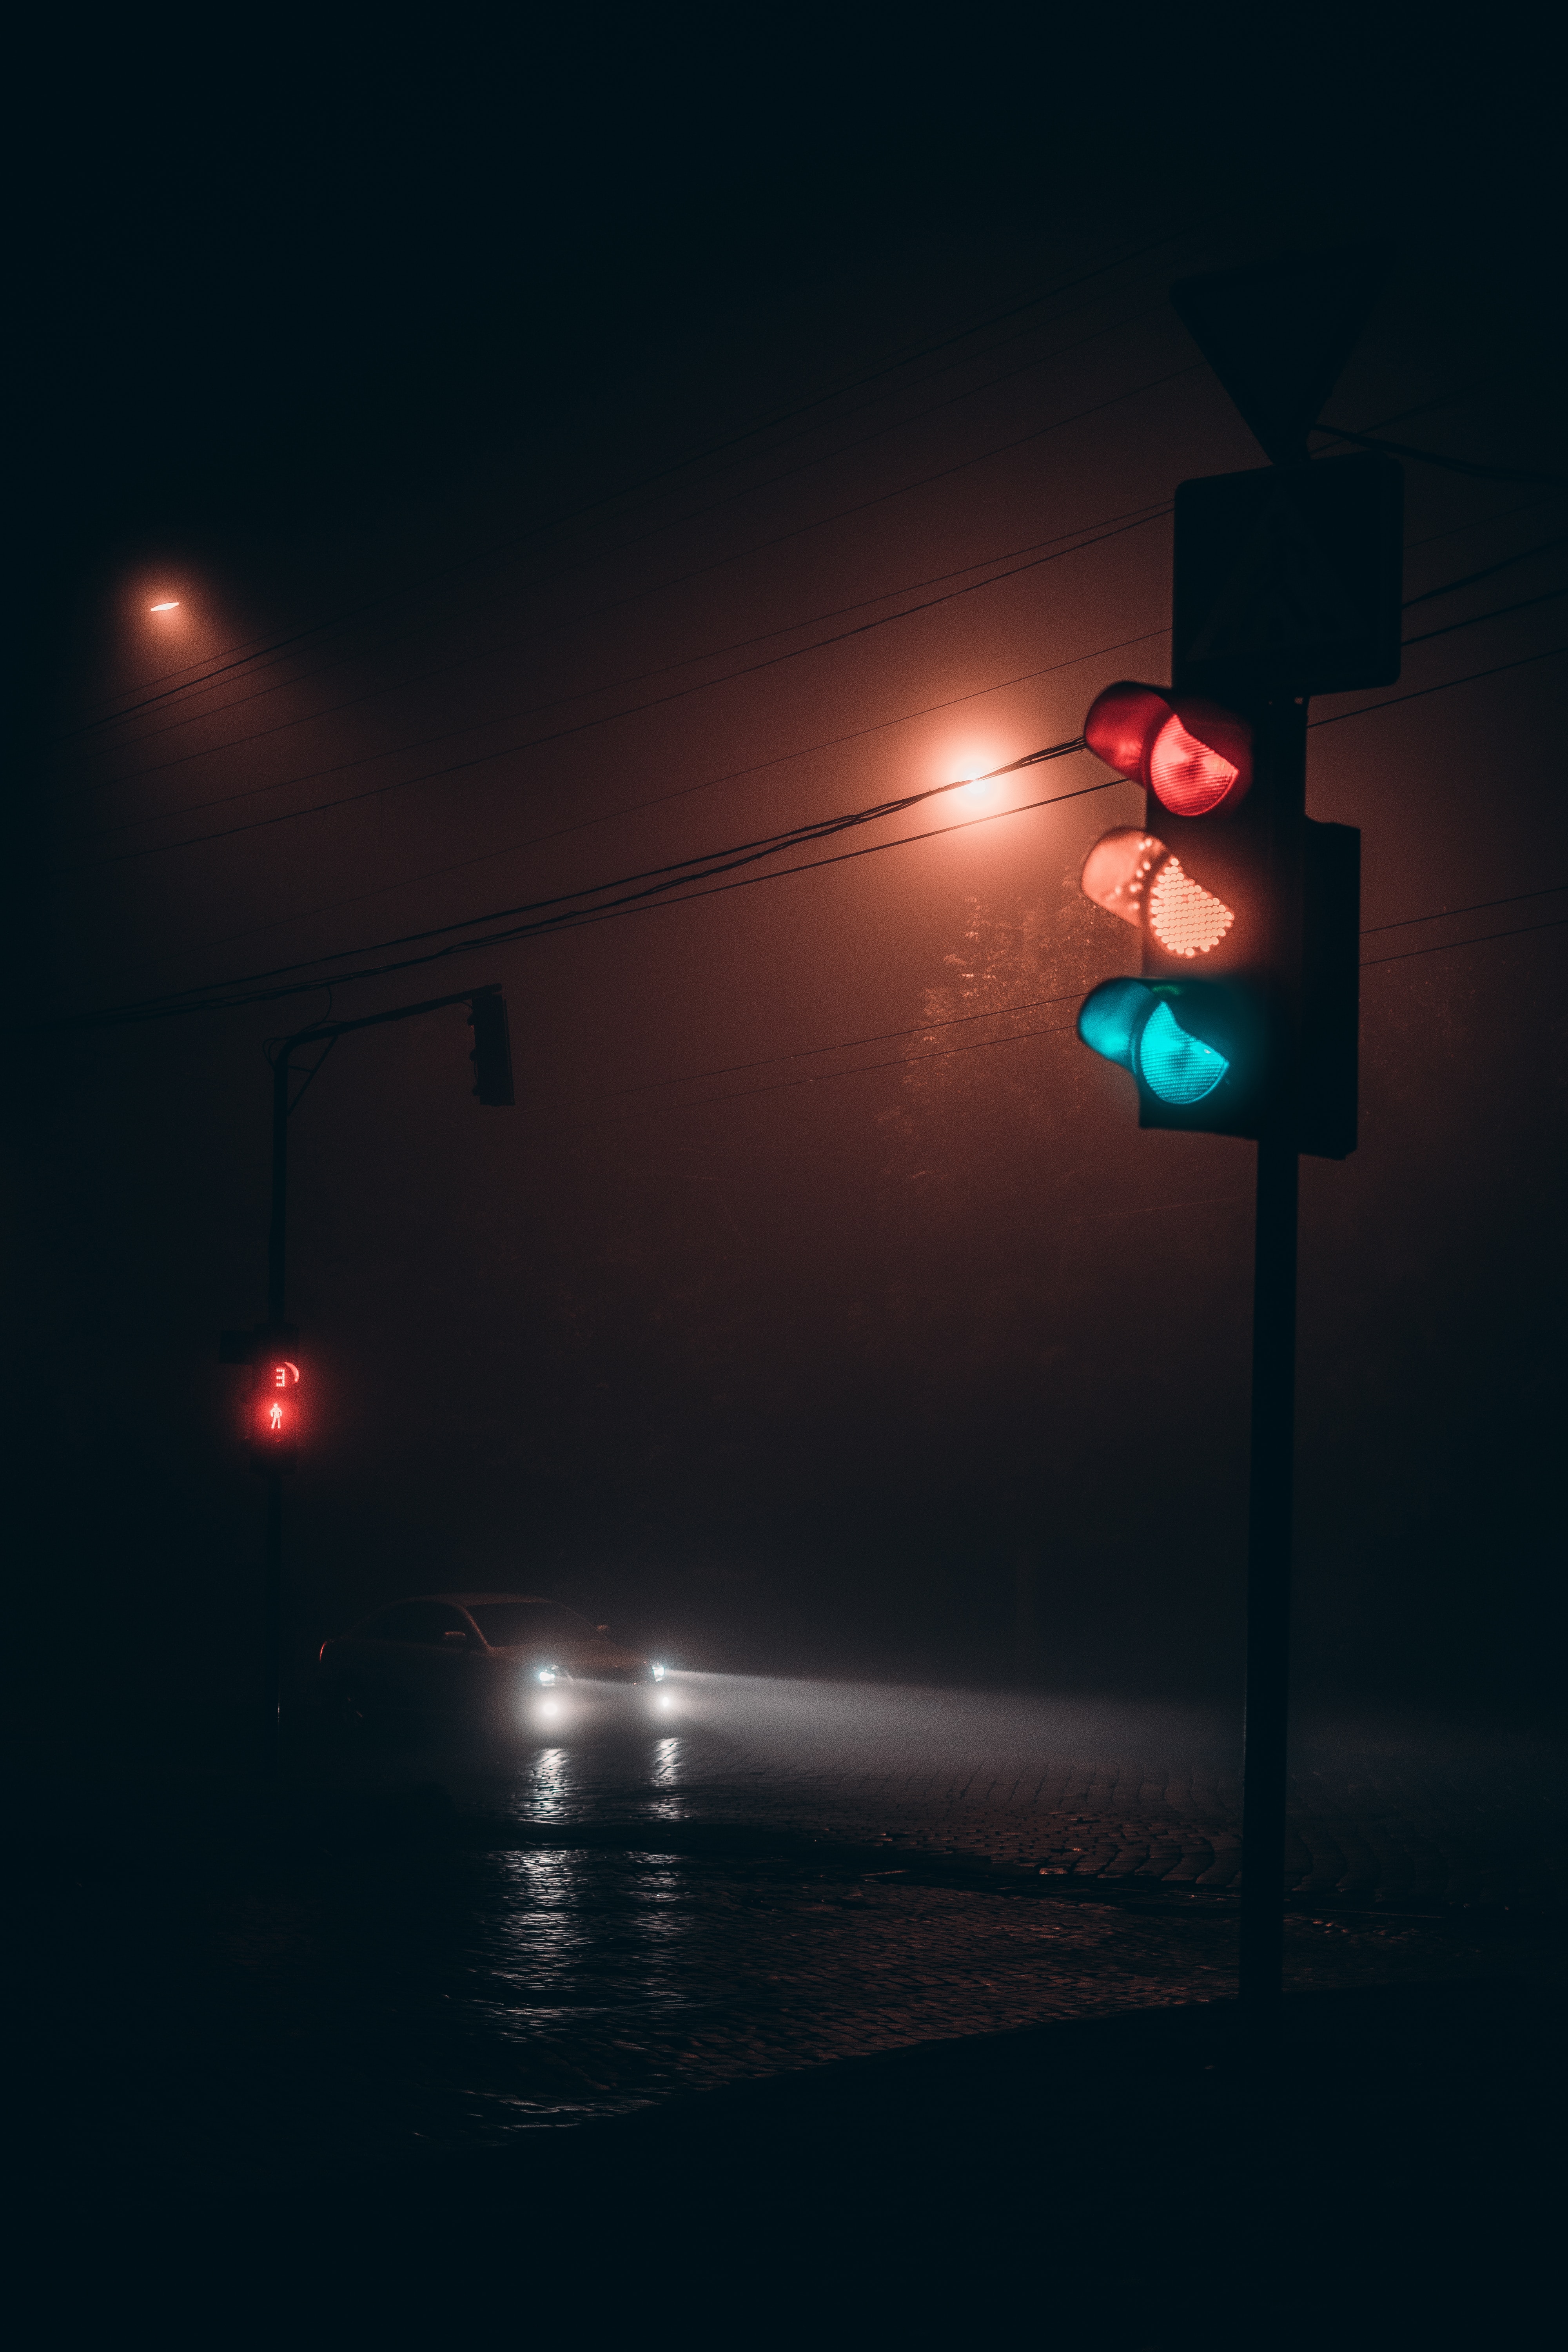 cities, fog, night, dark, road, car, machine, traffic light iphone wallpaper